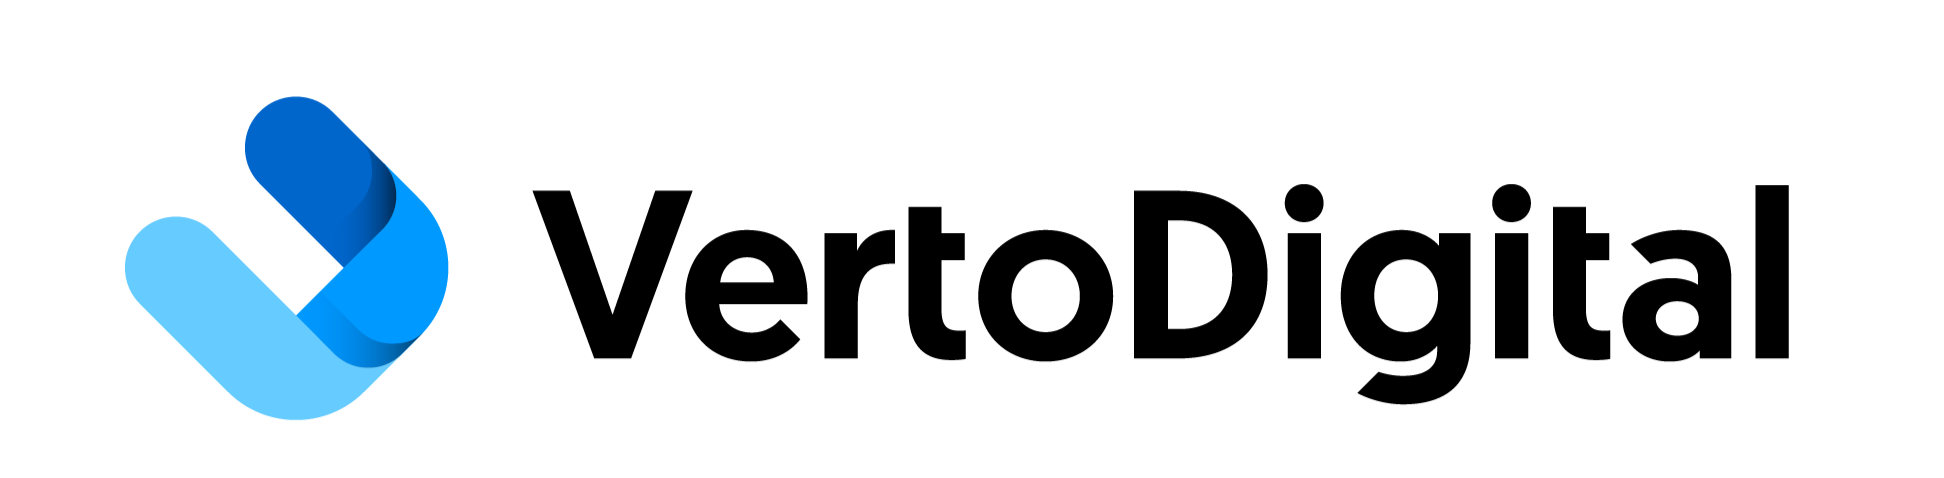 VertoDigital logo